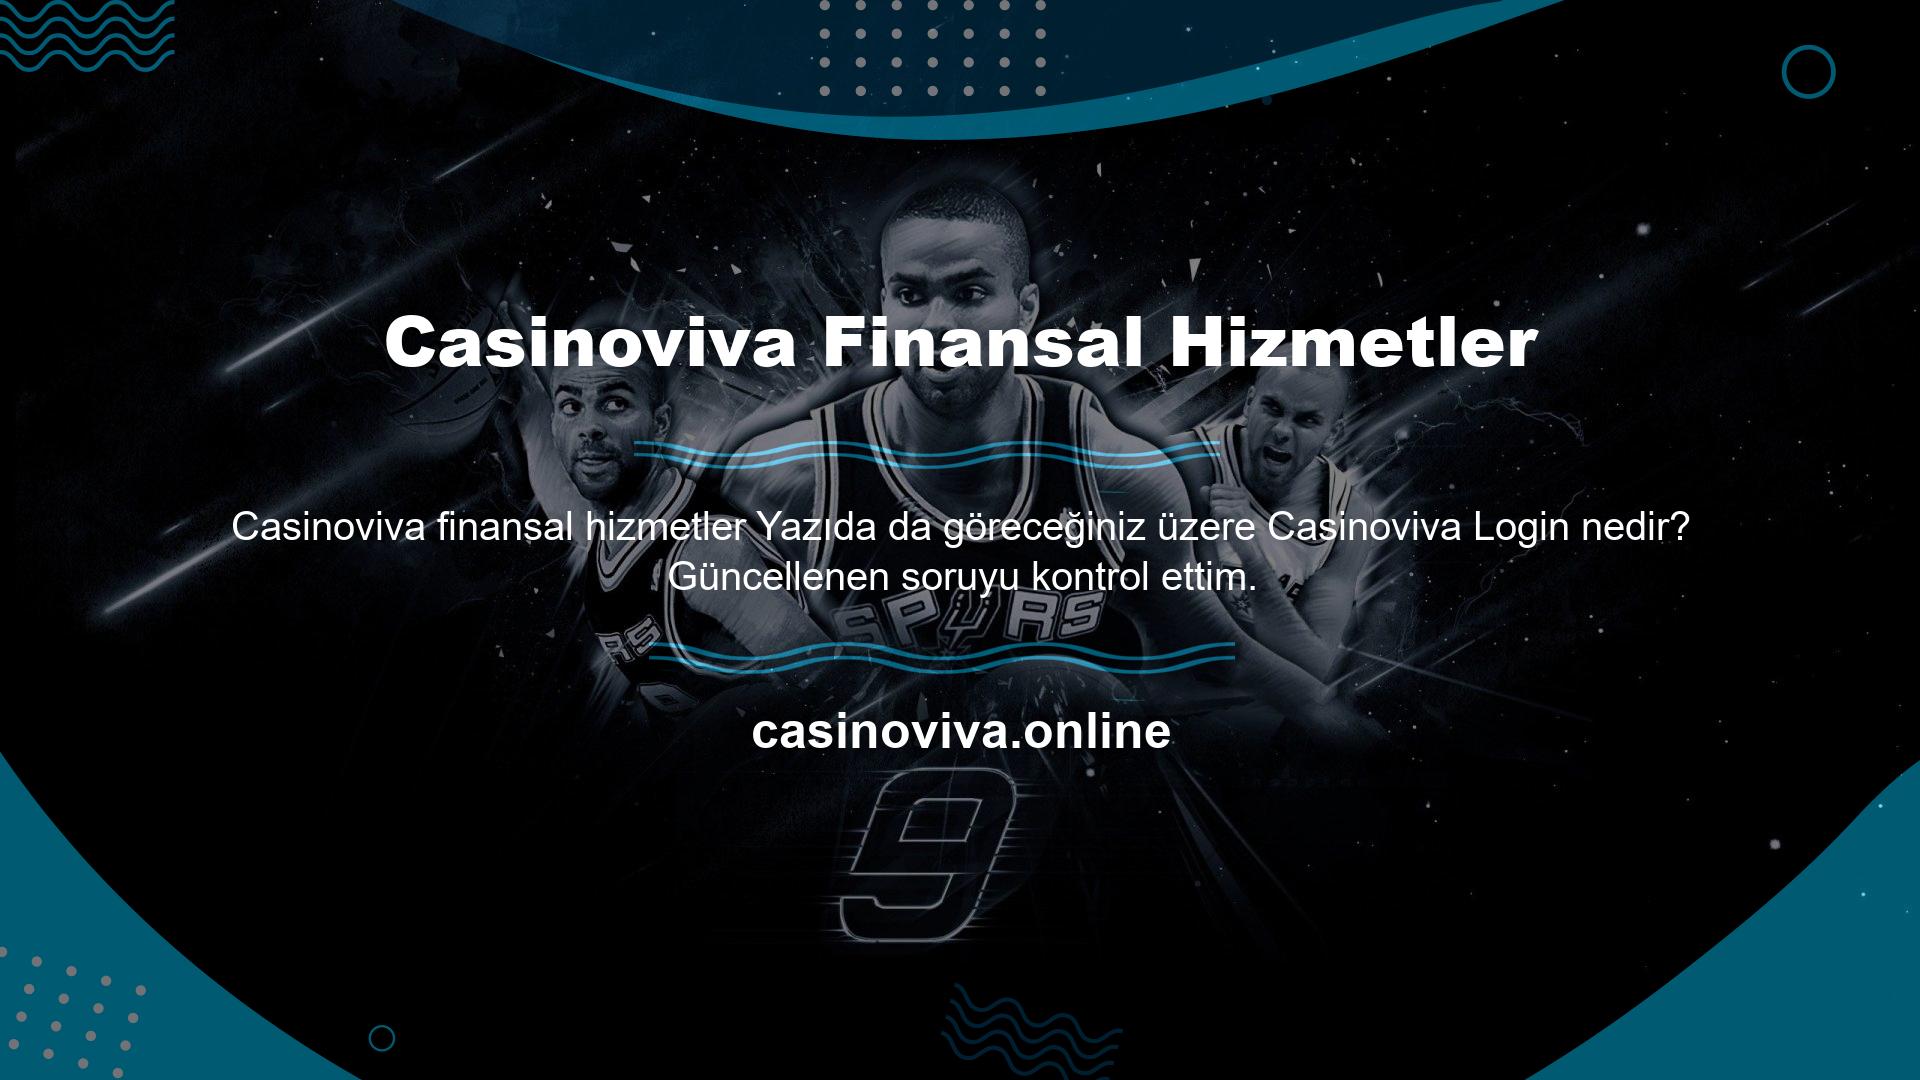 Casinoviva Finansal Hizmetler